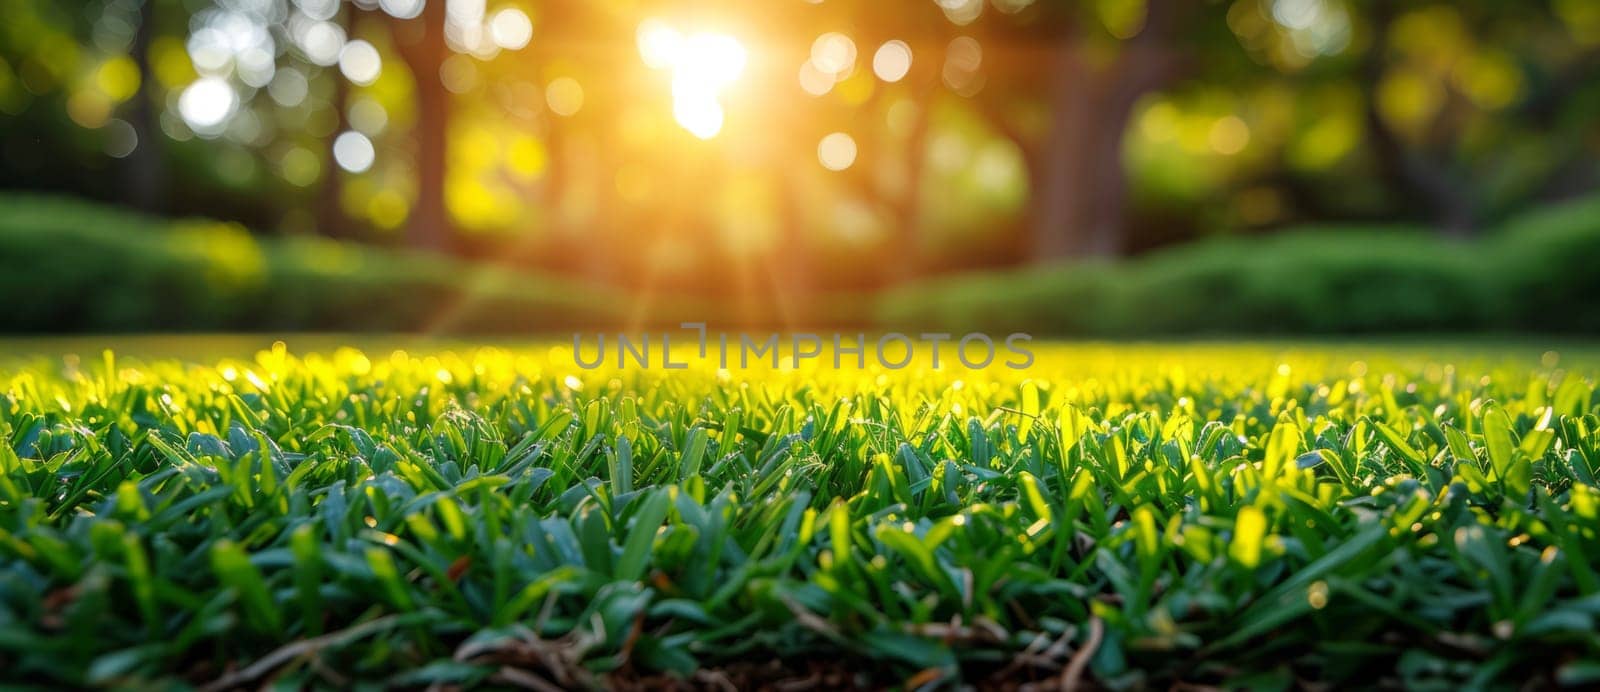 Green grass and sunlight banner background.